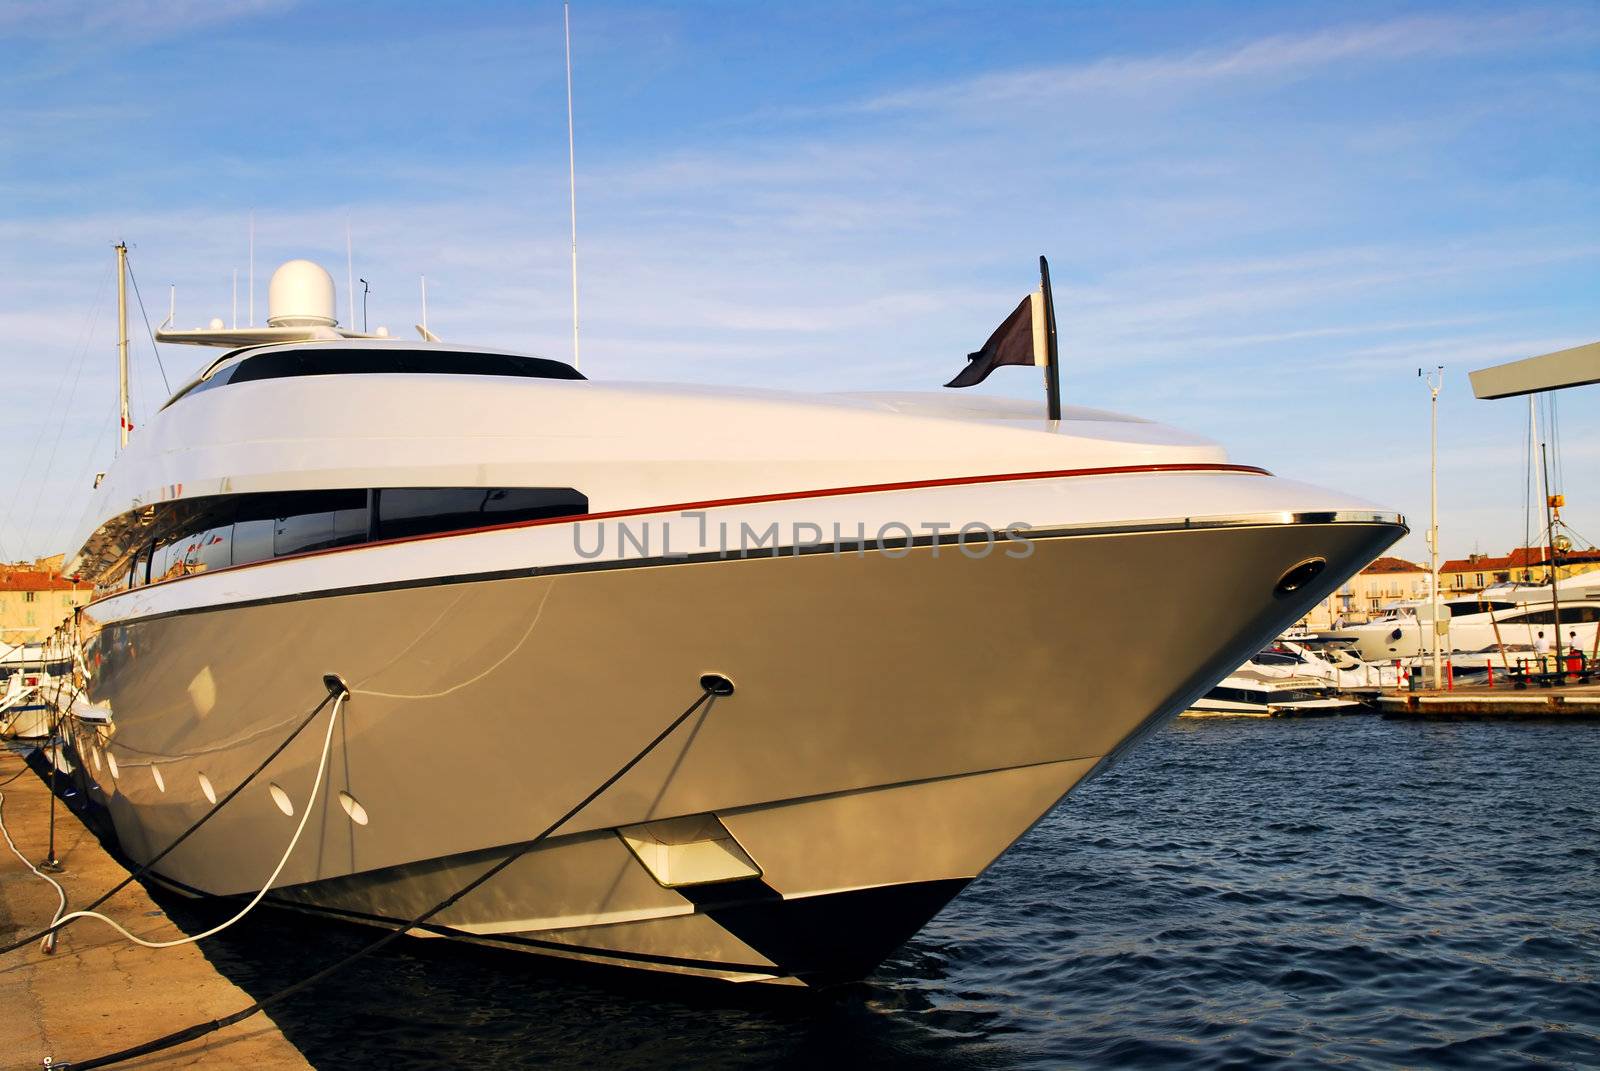 Luxury yacht by elenathewise